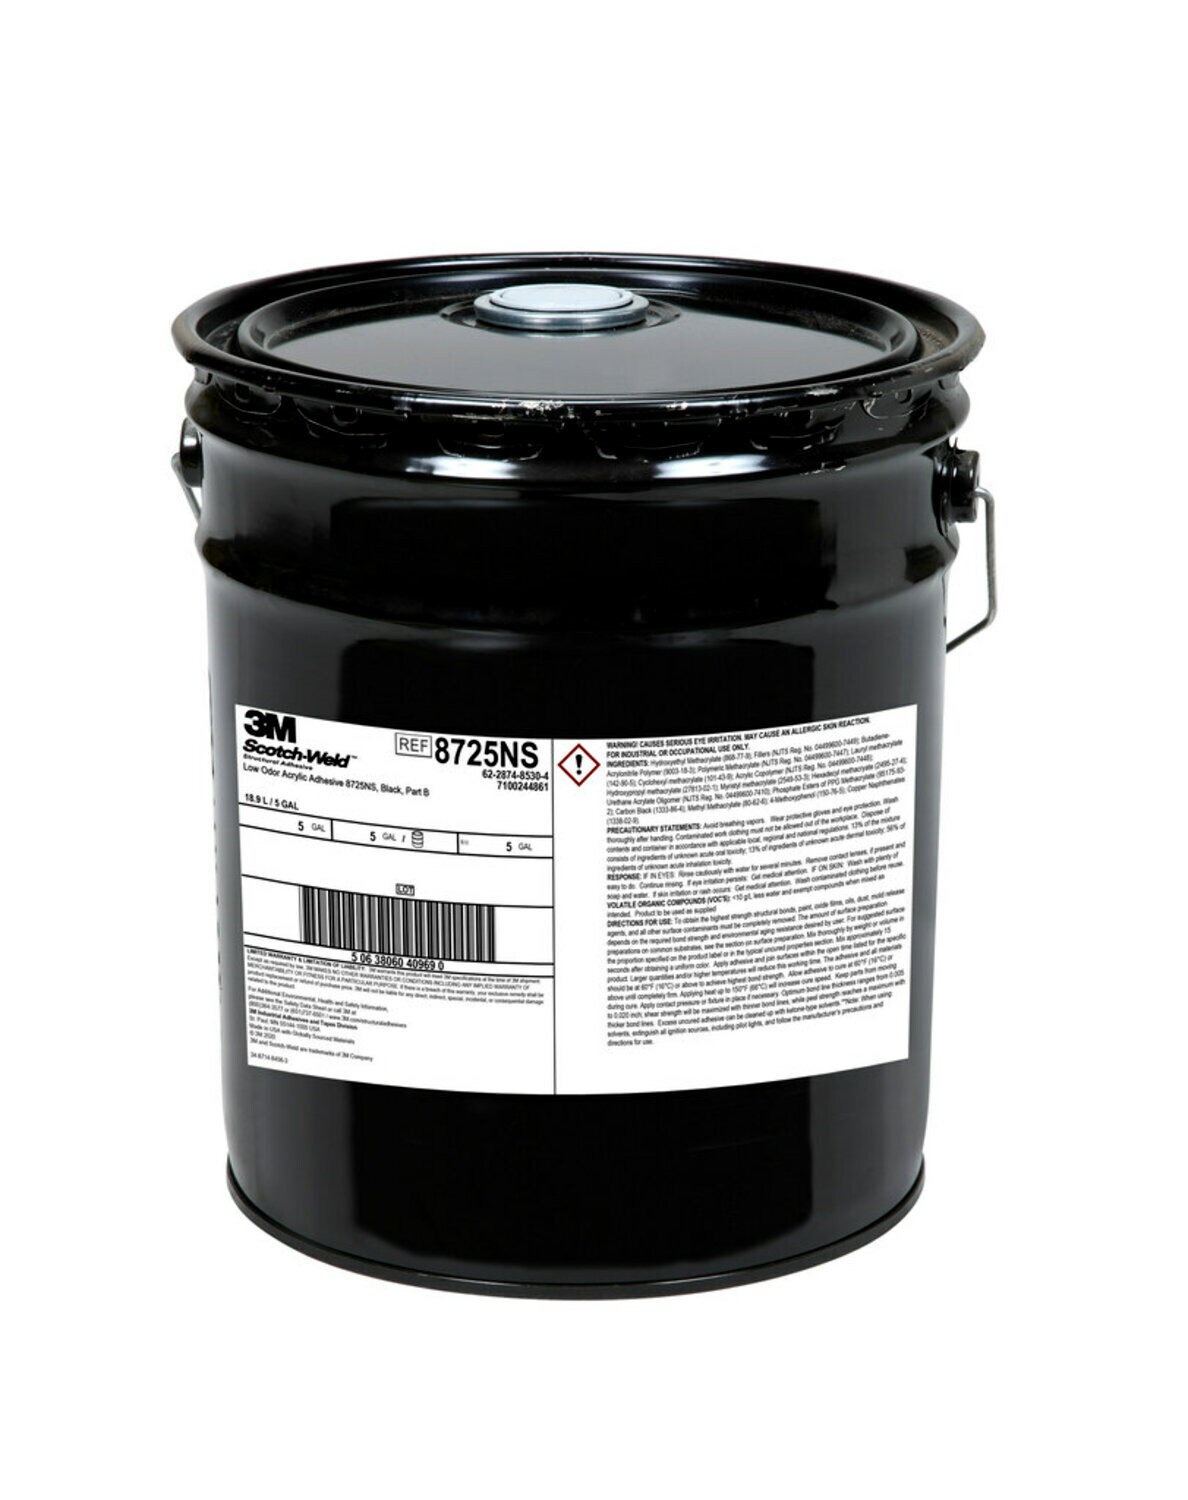 7100244861 - 3M Scotch-Weld Low Odor Acrylic Adhesive 8725NS, Black, Part B, 5
Gallon (Pail), Drum